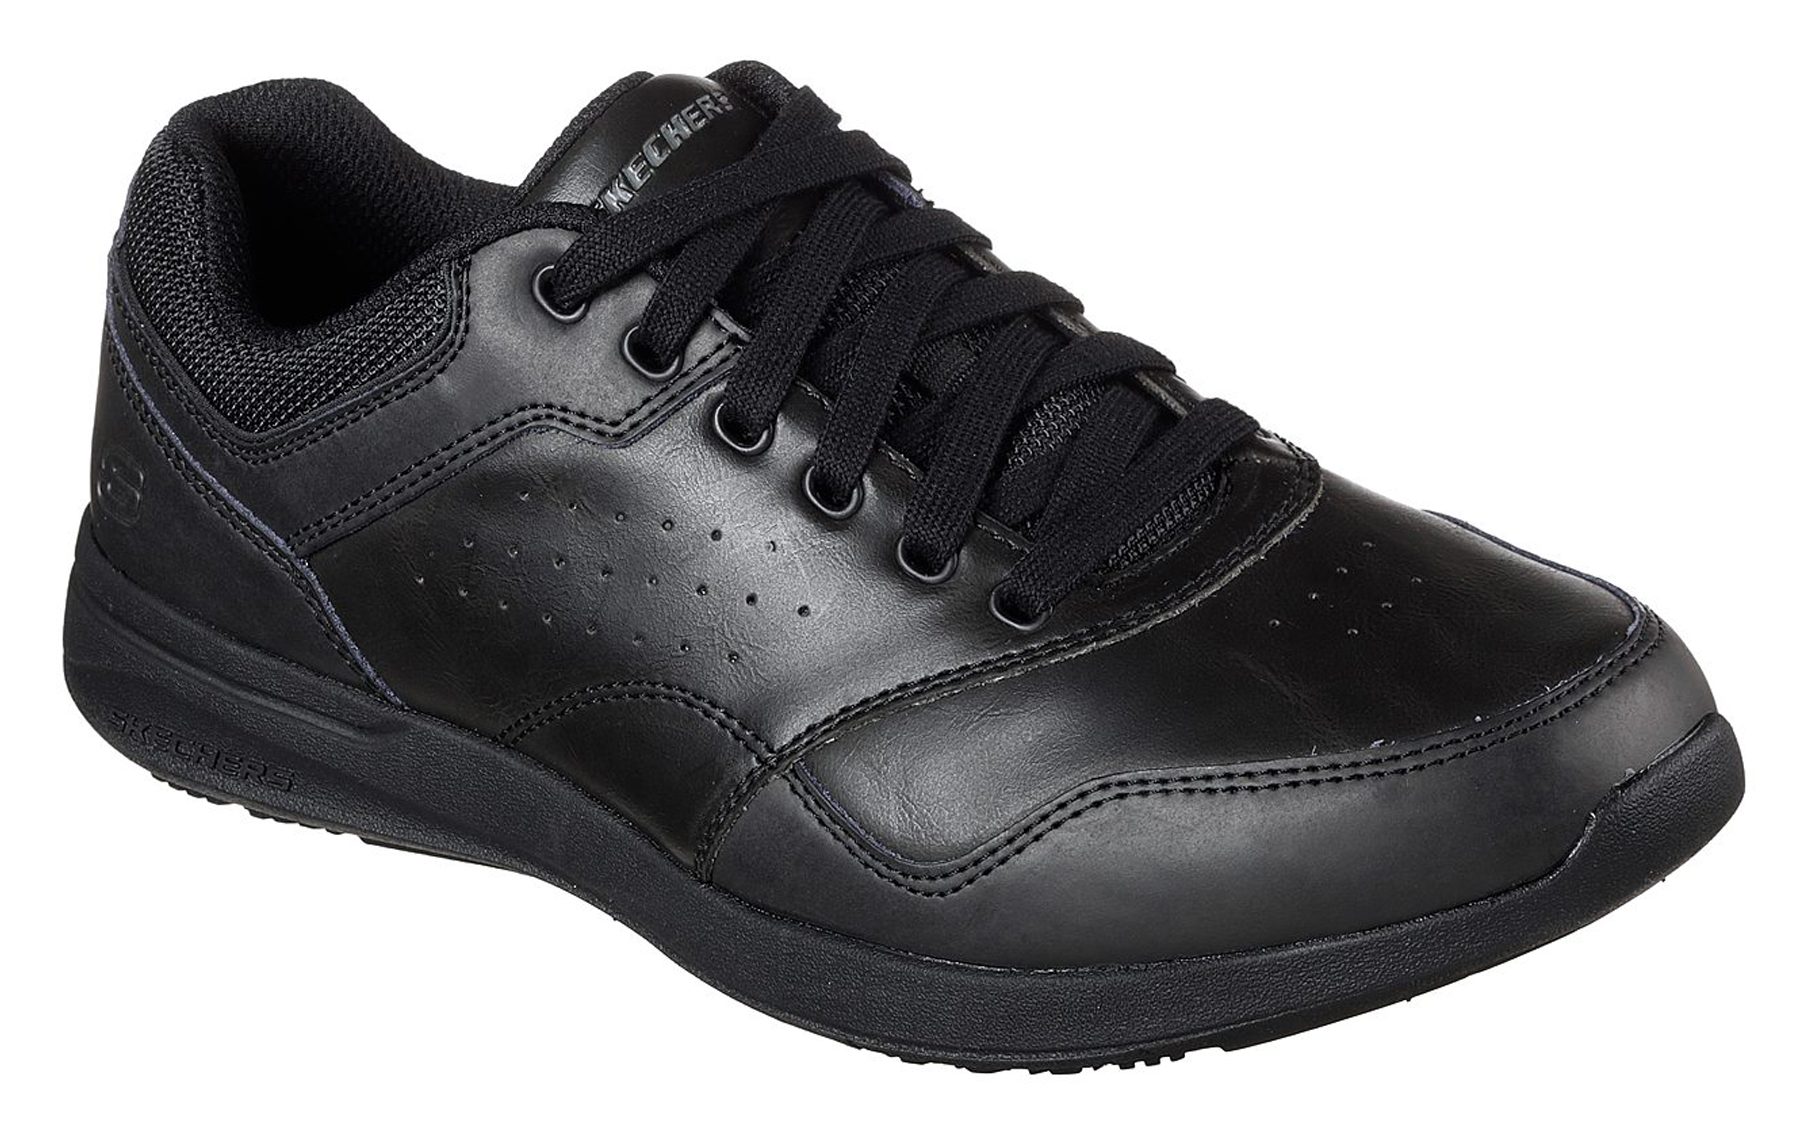 Skechers Relaxed Fit: Elent - Velago Black 65406 BBK - Casual Shoes ...